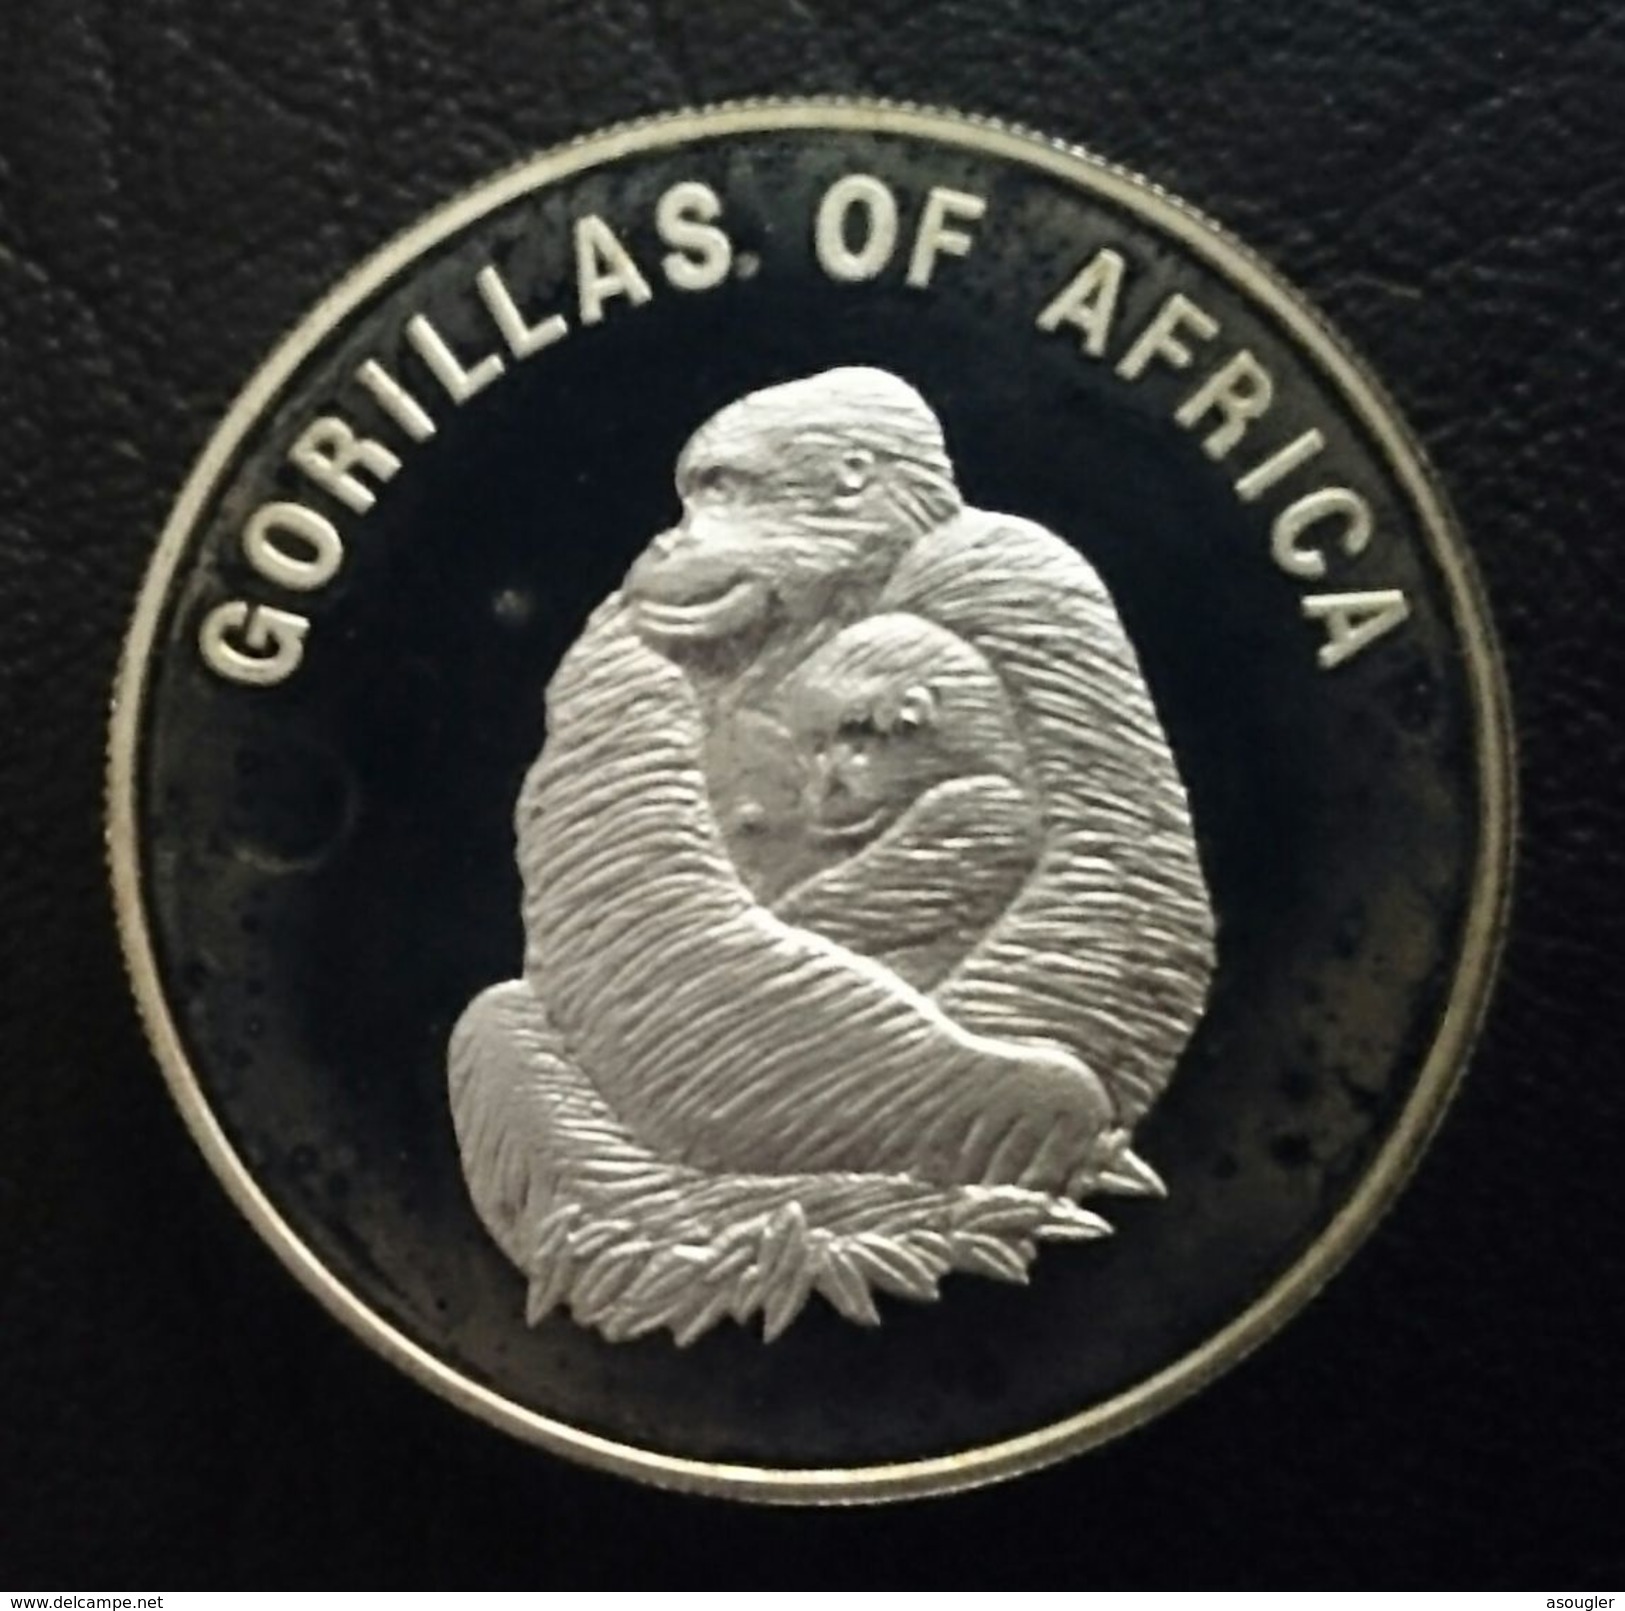 UGANDA 1000 SHILLINGS 2003 Silver Plated Bronze "Gorillas Of Africa" Free Shipping Via Registered Air Mail - Ouganda